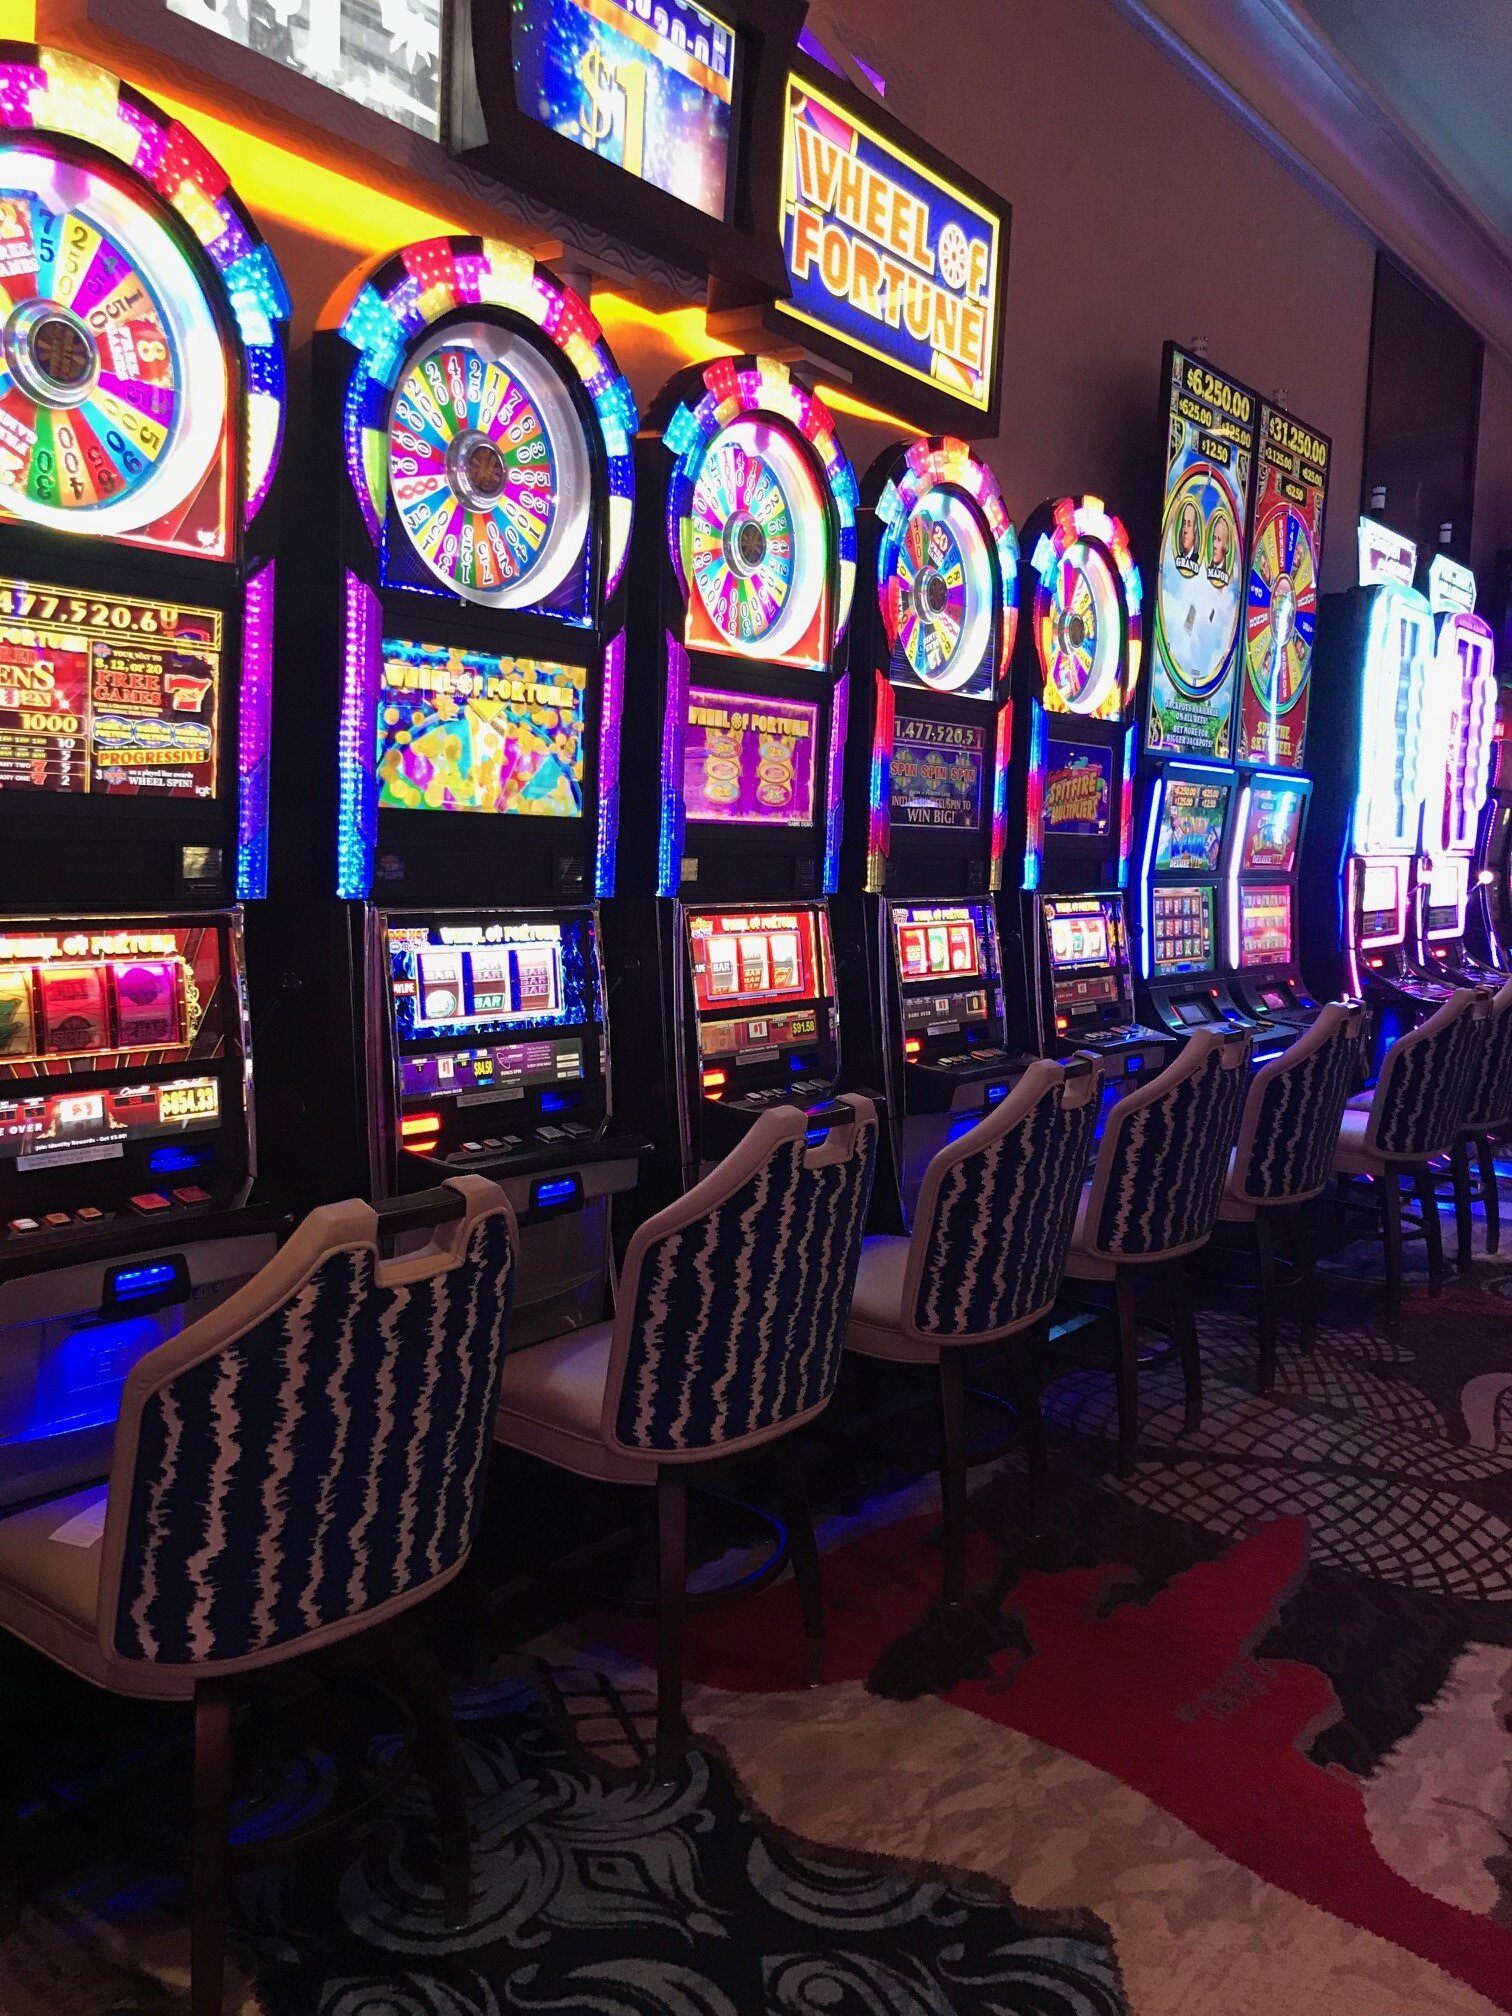 Las Vegas Travel Guide - Top things to do when in Las Vegas - Slot machines everywhere in Vegas